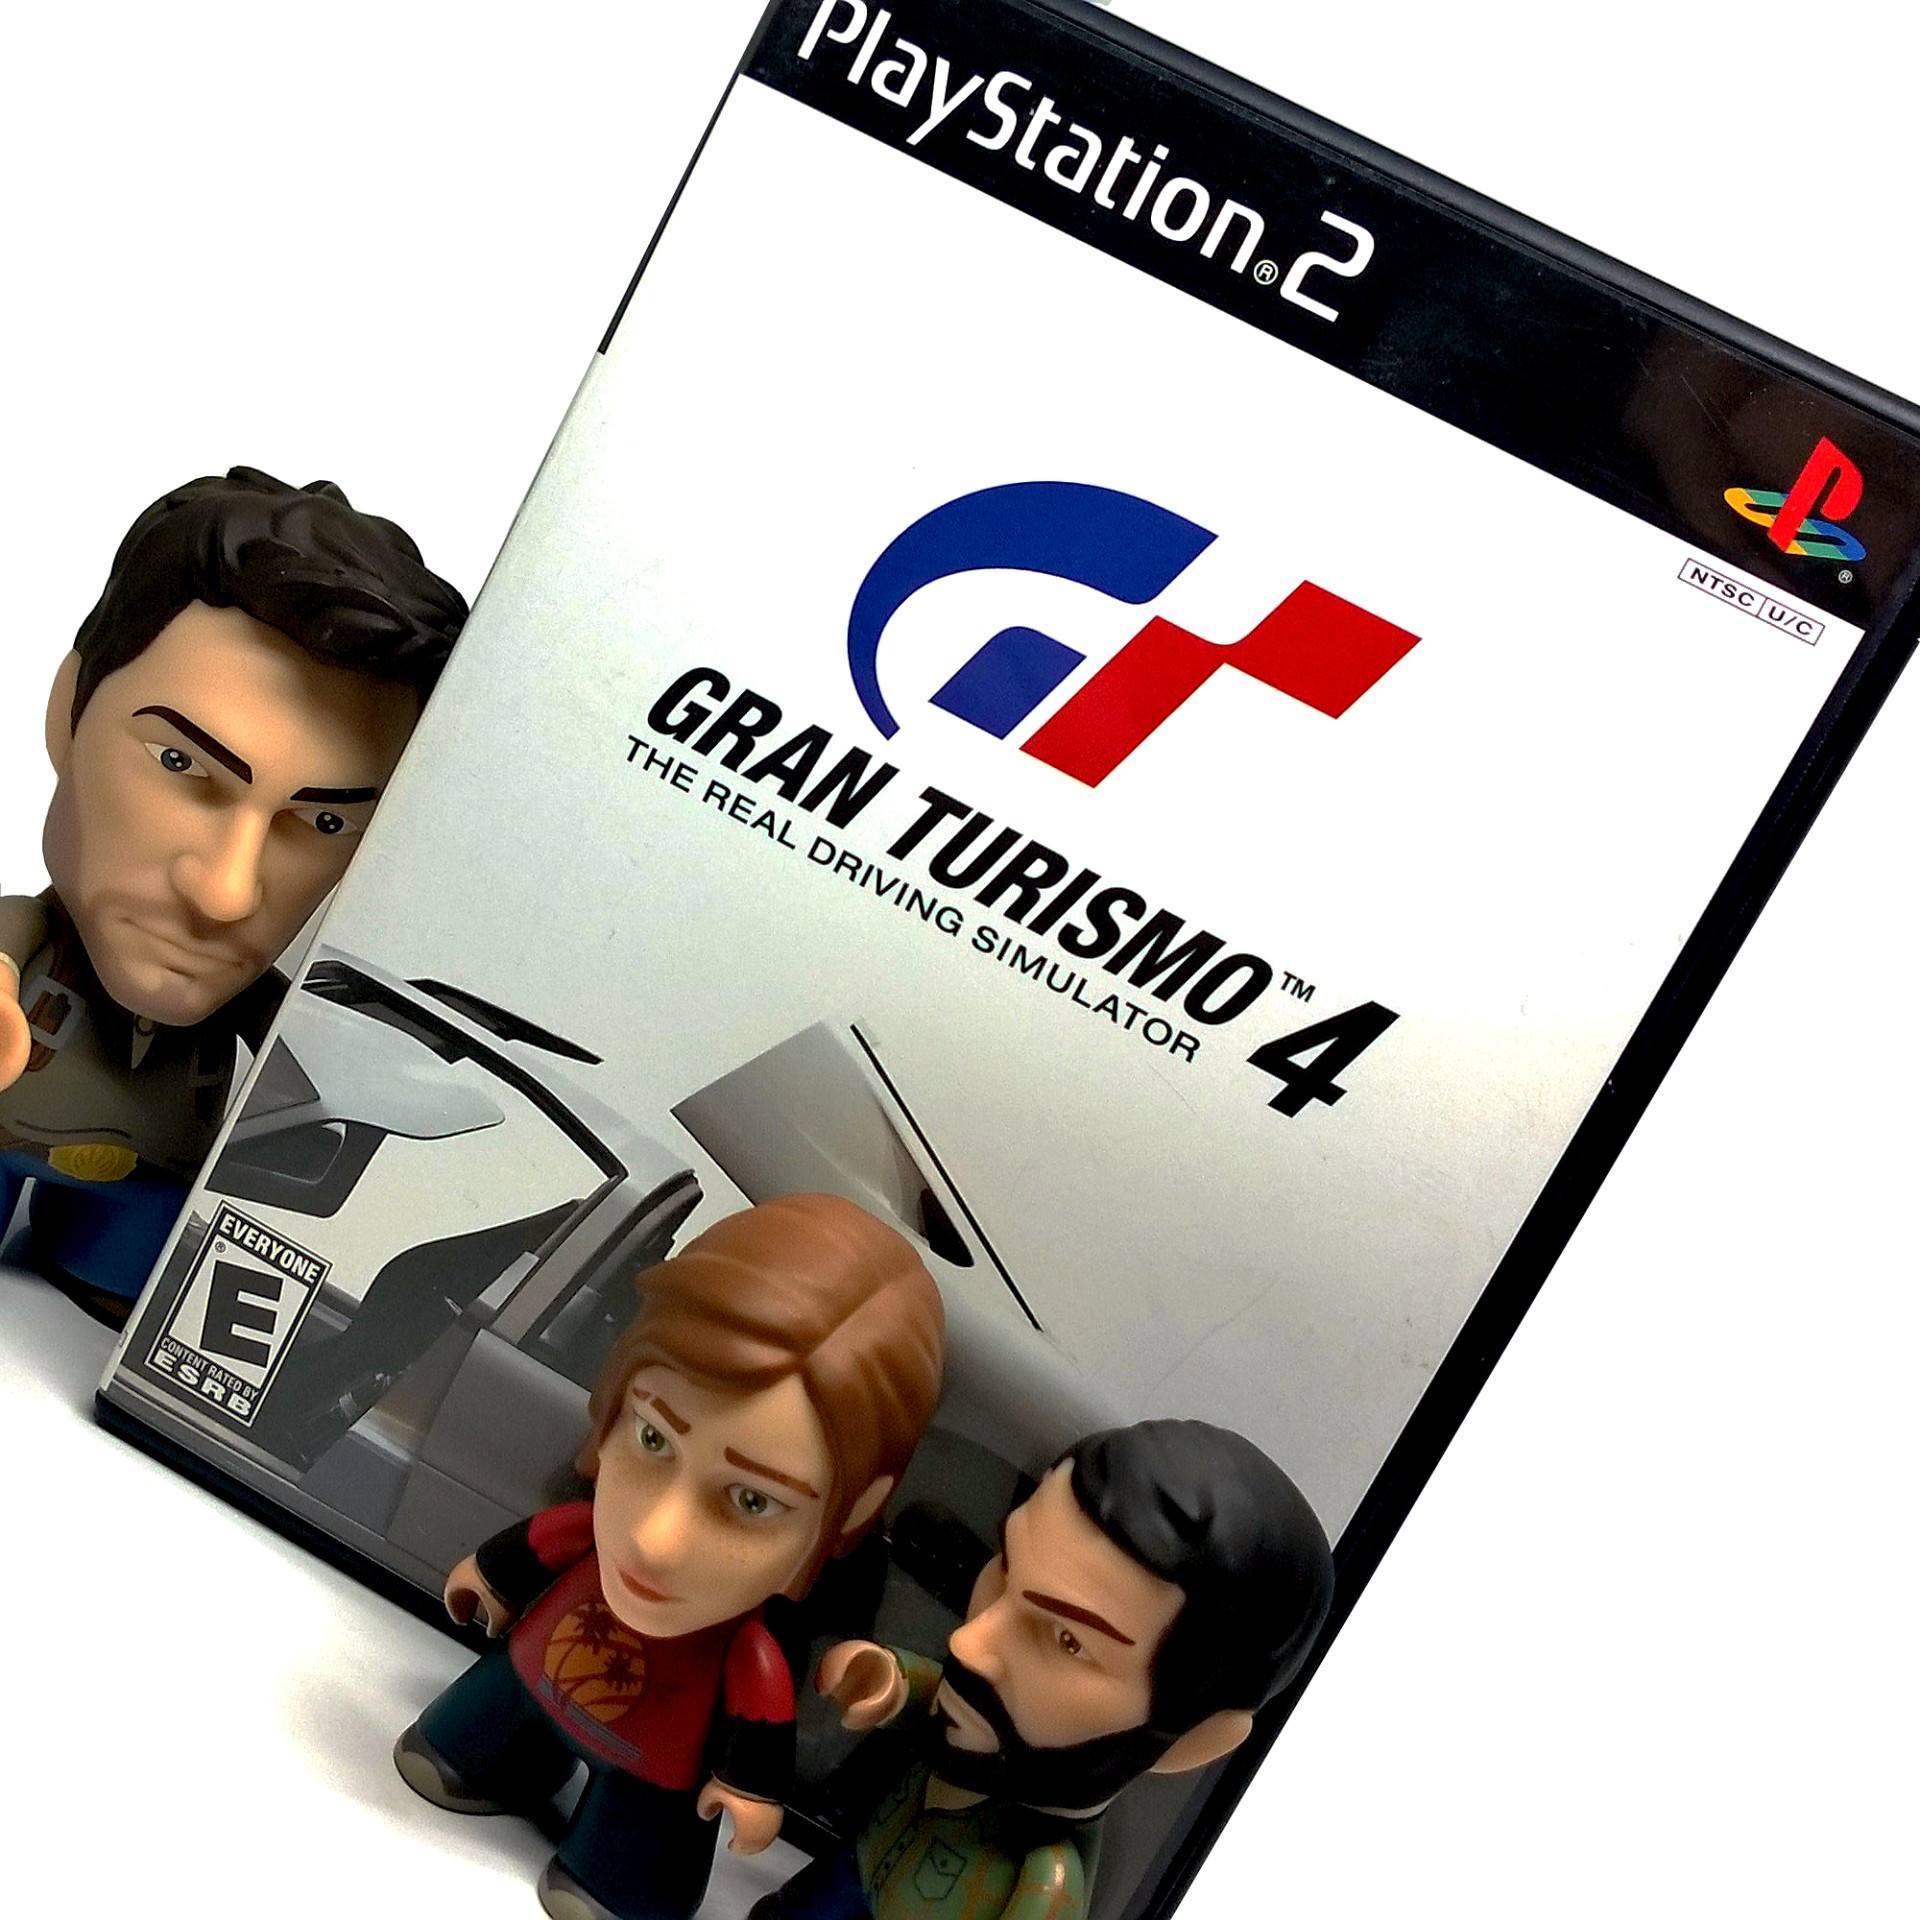 Playstation 2 / Gran Turismo 4, Sony SCUS-97328